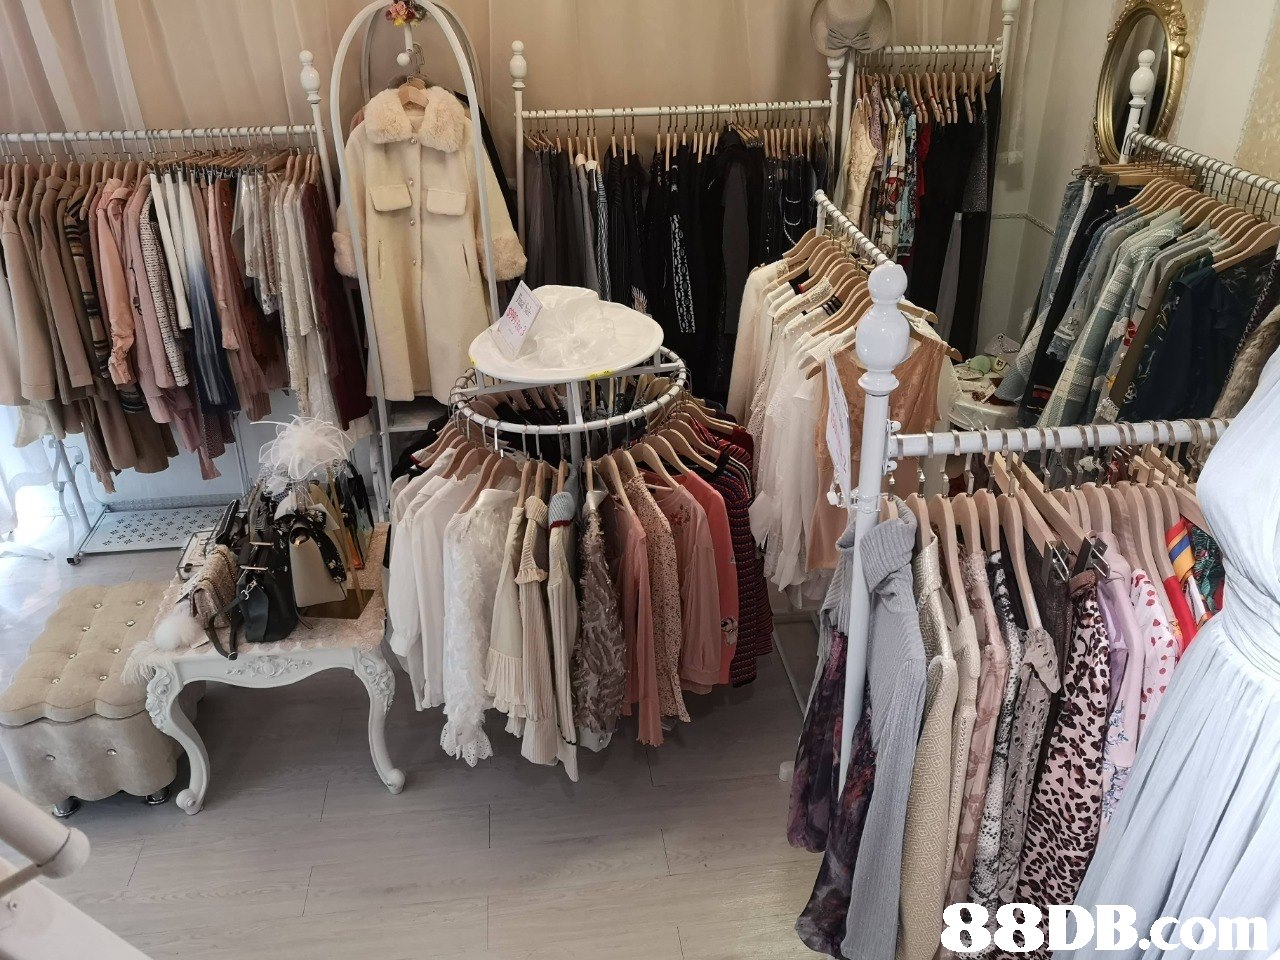 88DB.om  Boutique,Room,Clothes hanger,Textile,Furniture